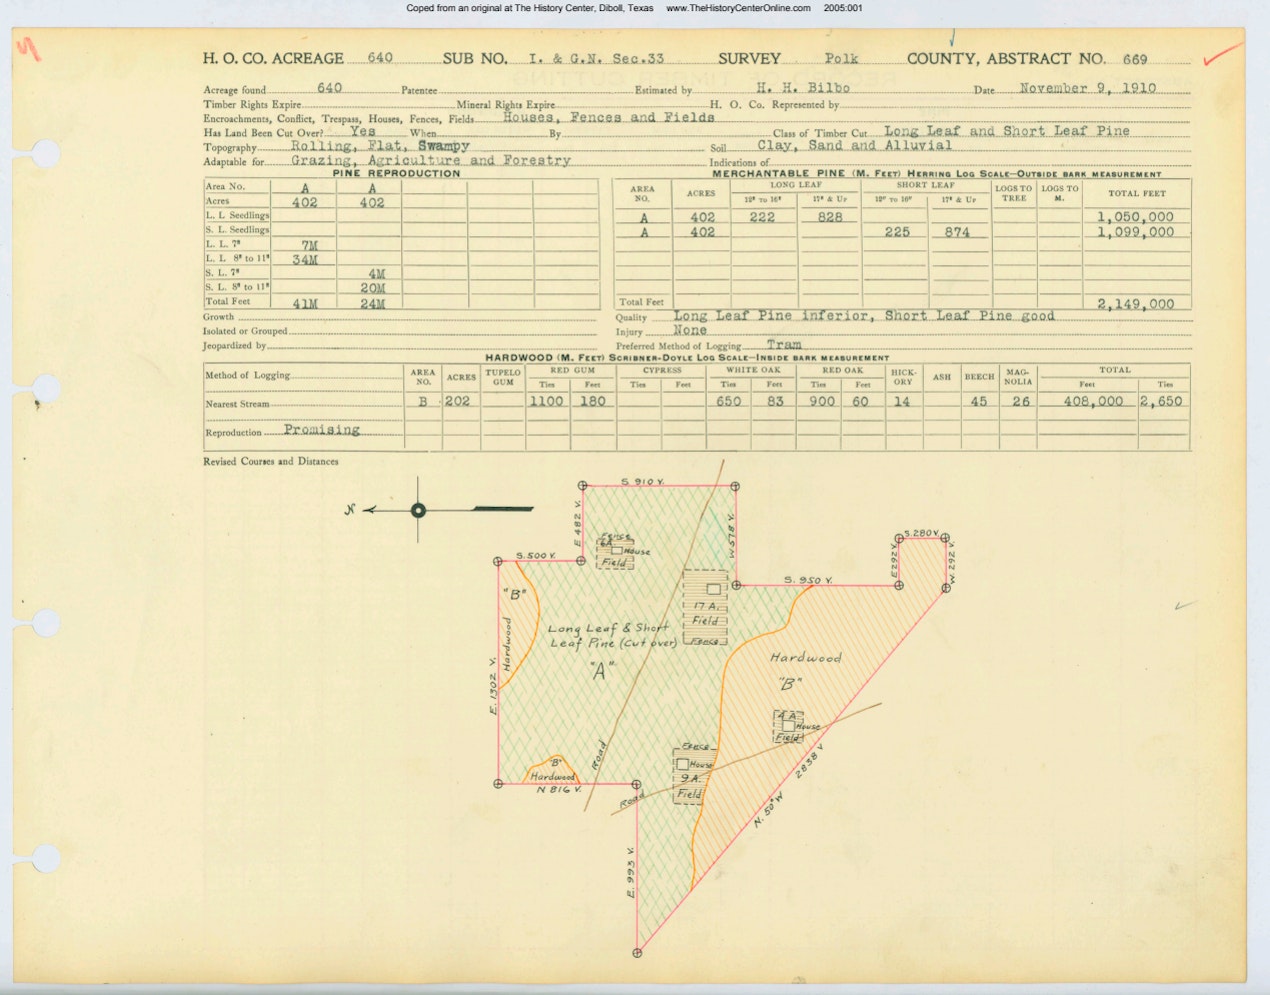 0009 Abstract 669, I.G.N. Railway Company Survey, Polk County